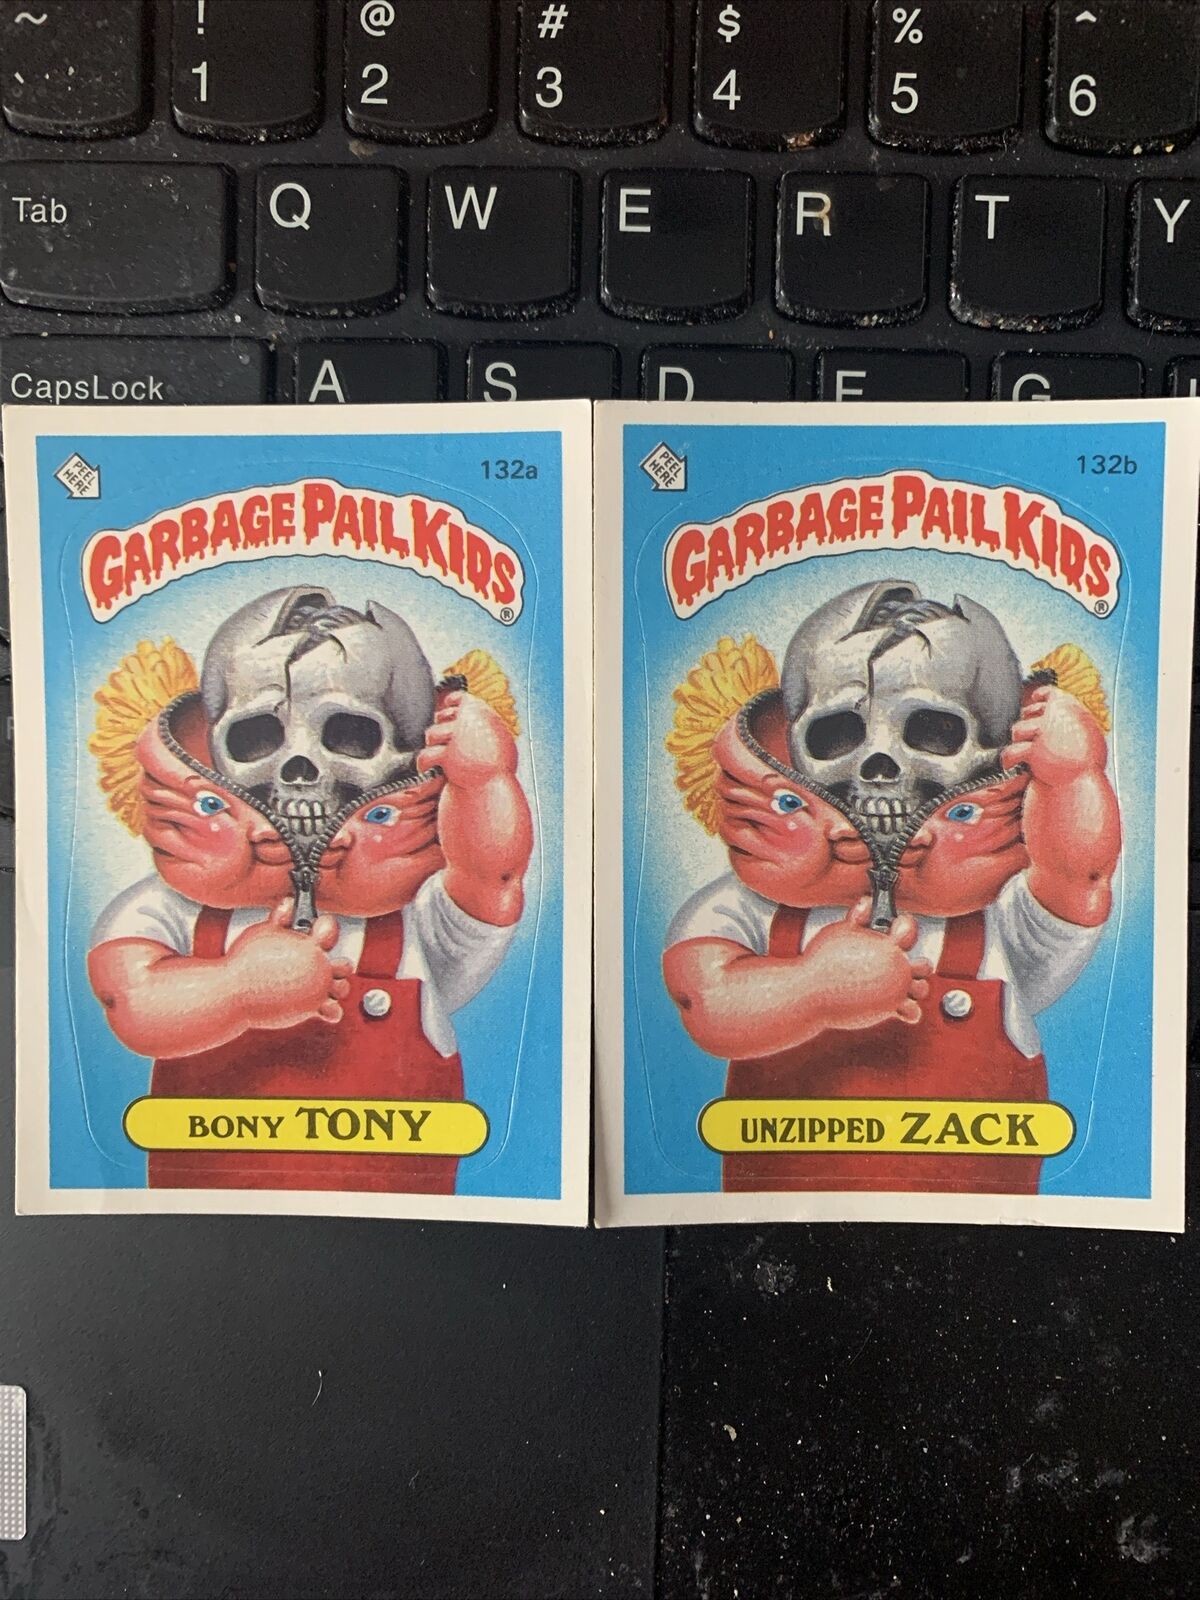 Unzipped ZACK and Bony Tony 1986 Topps Garbage Pail Kids Series 4 #132a And 132b